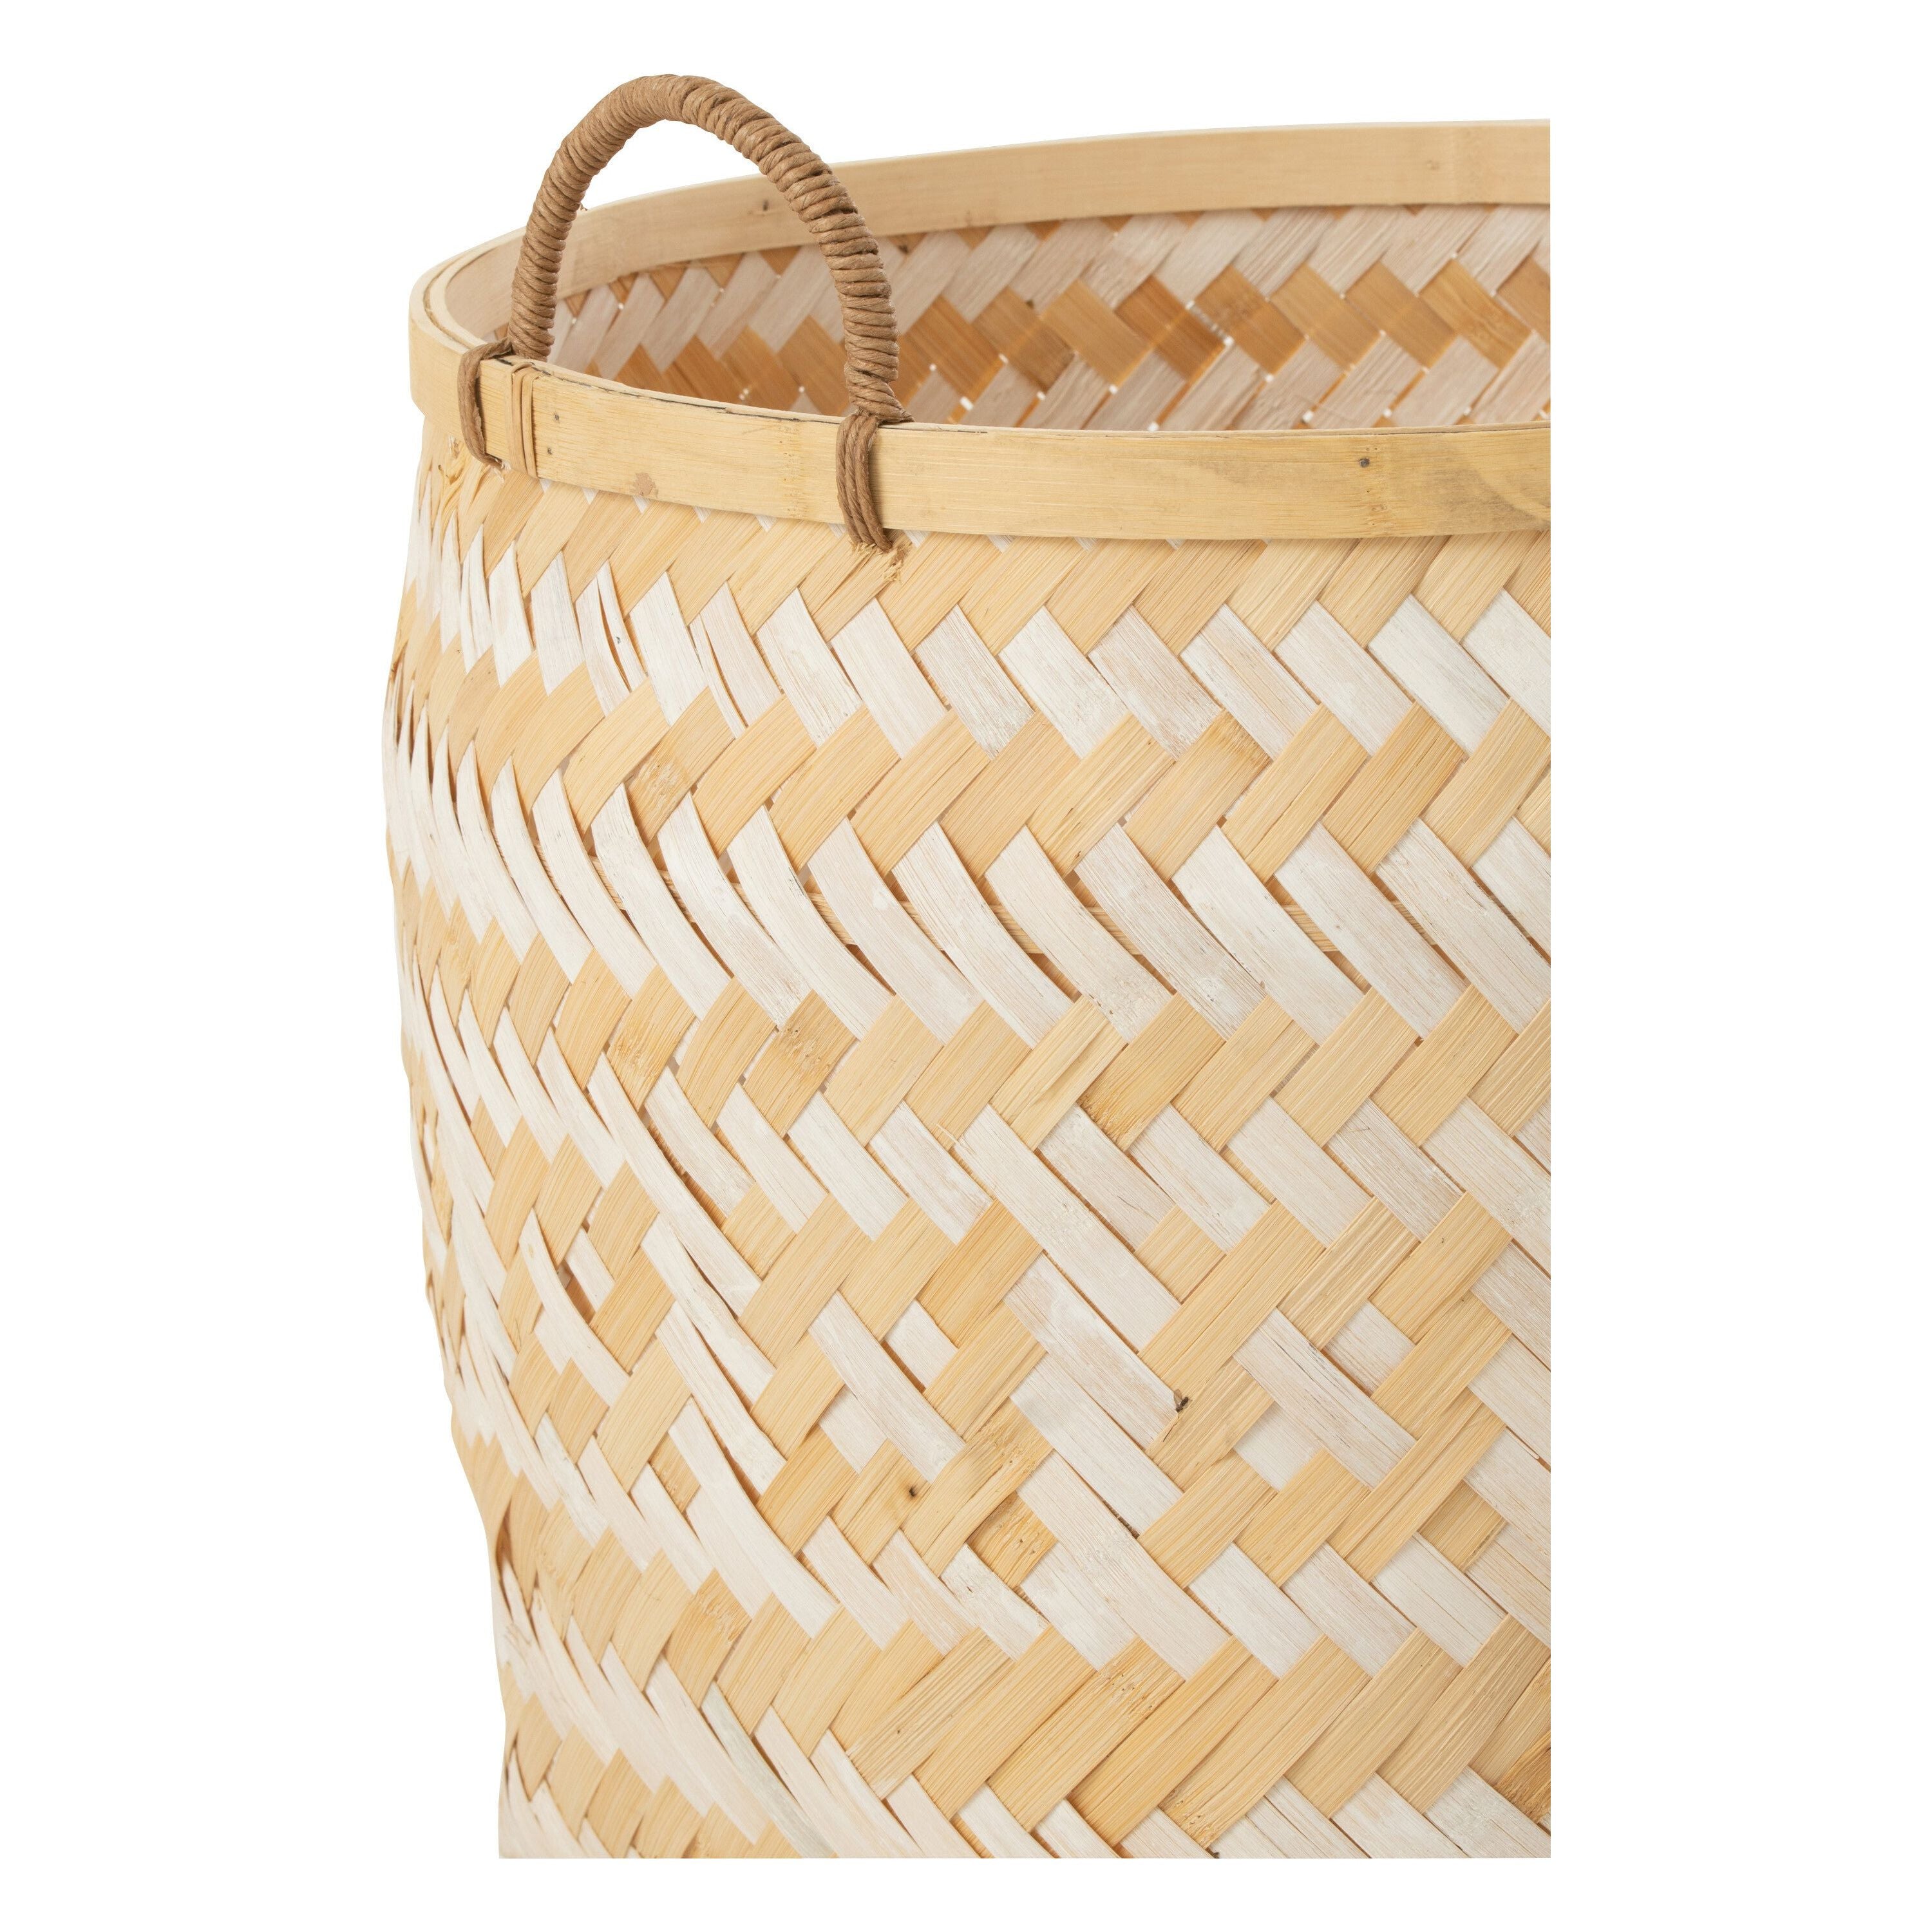 Basket Patterns Handles Bamboo Natural/white